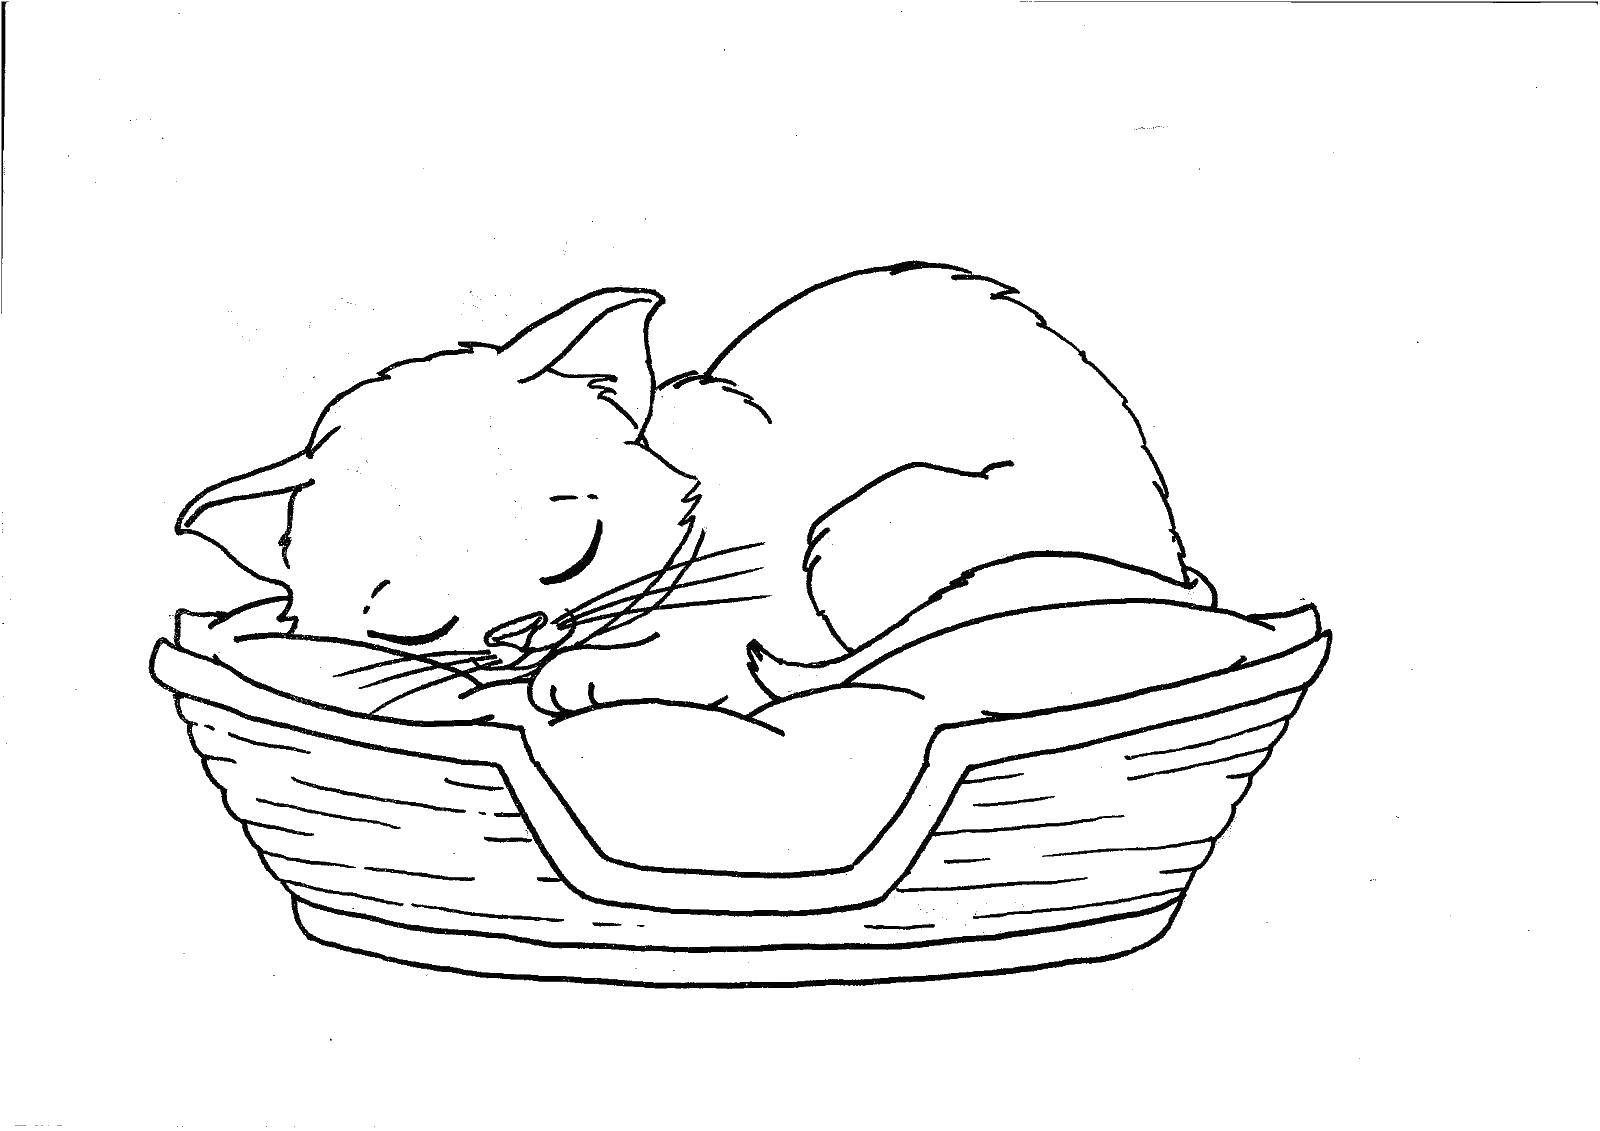 Coloring Kitten sleeping. Category Cats and kittens. Tags:  animals, kitten, cat, sleep.